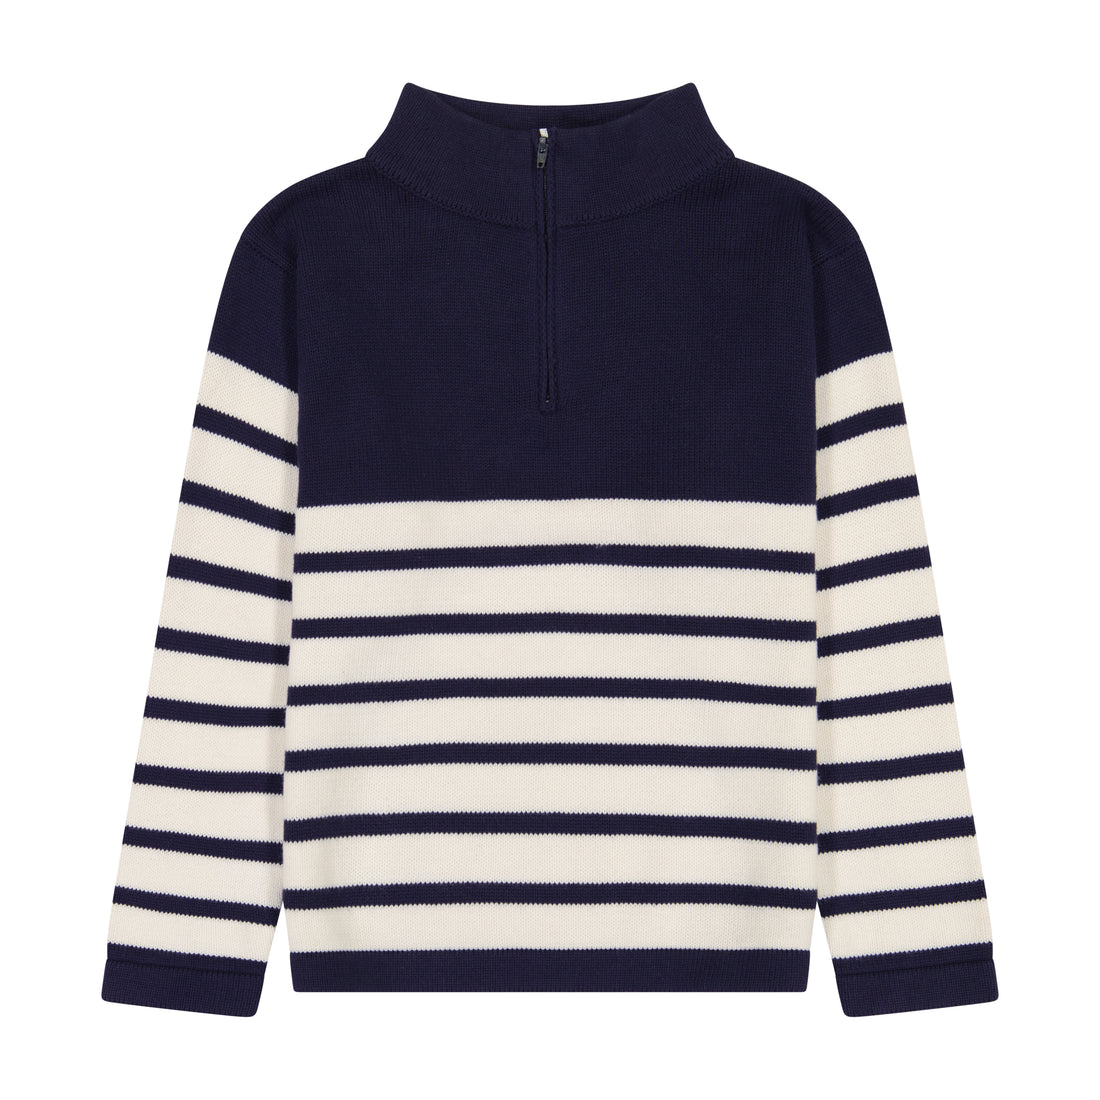 Cotton Boys Zip Sweater Breton Navy White Stripe – Busy Bees